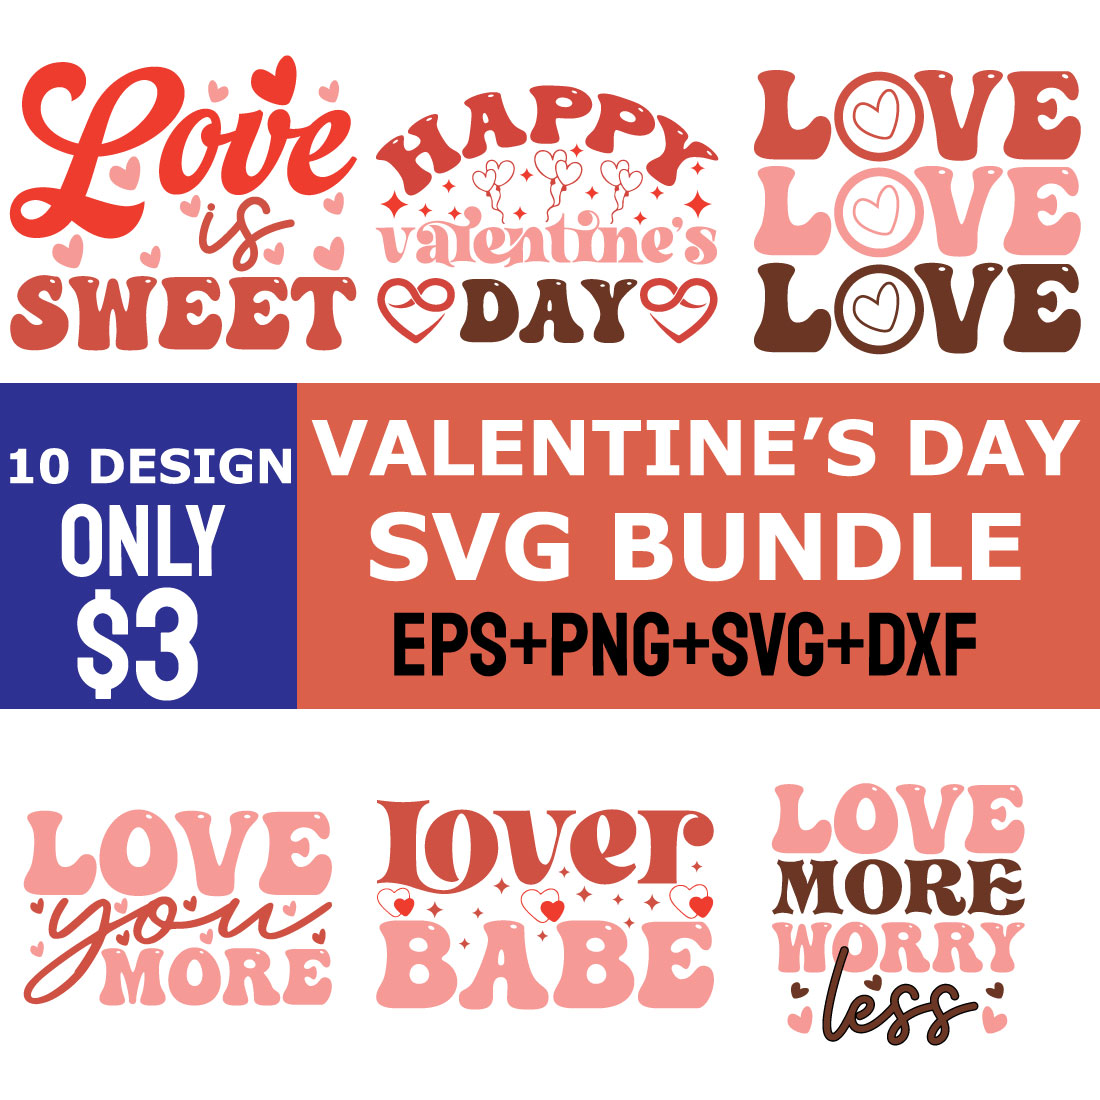 Valentine's Day SVG Bundle, 10 Design main cover.